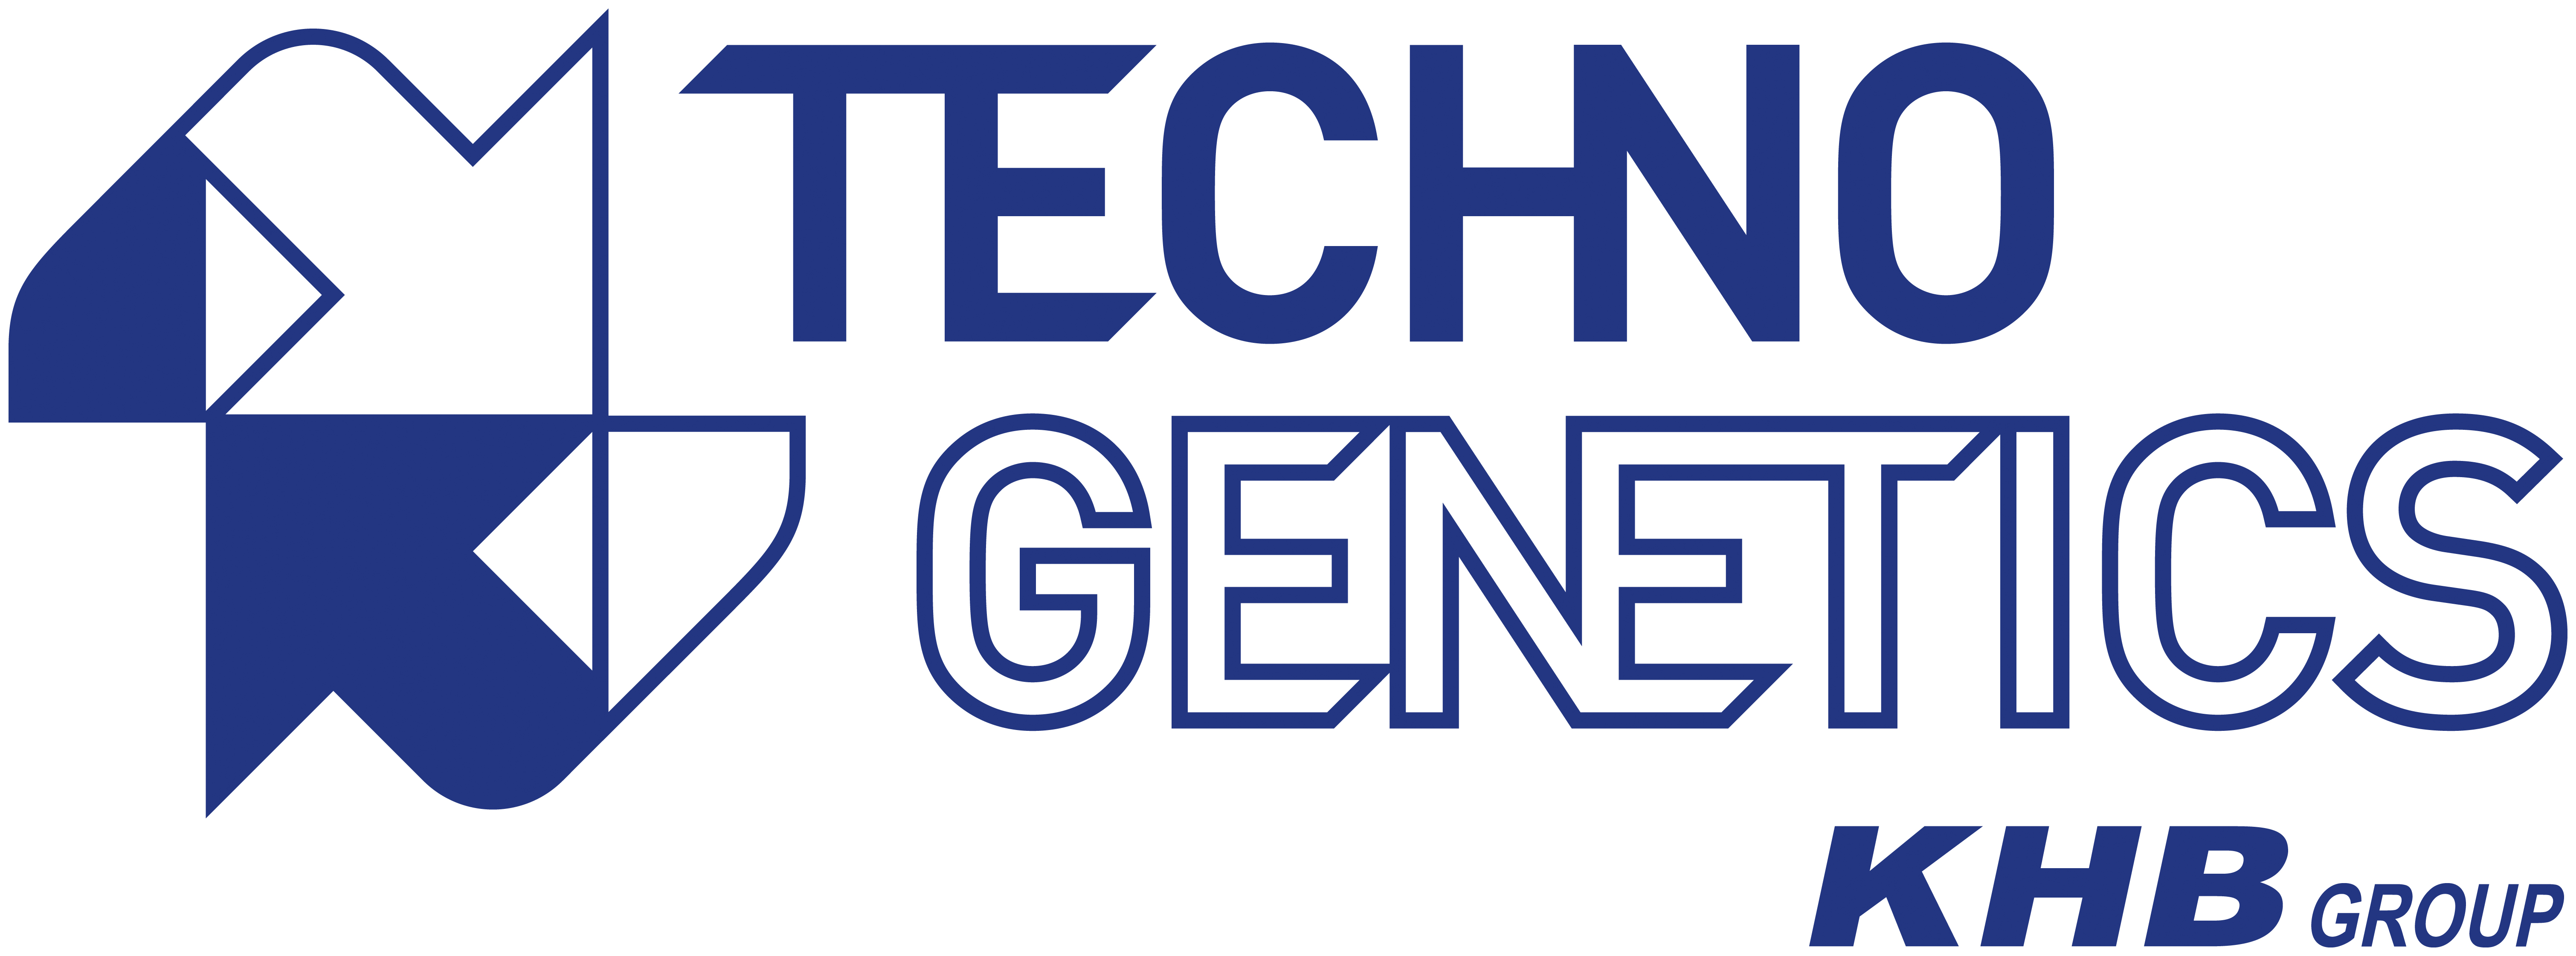 TECHNOGENETICS-logo-rgb-HIGH.jpg